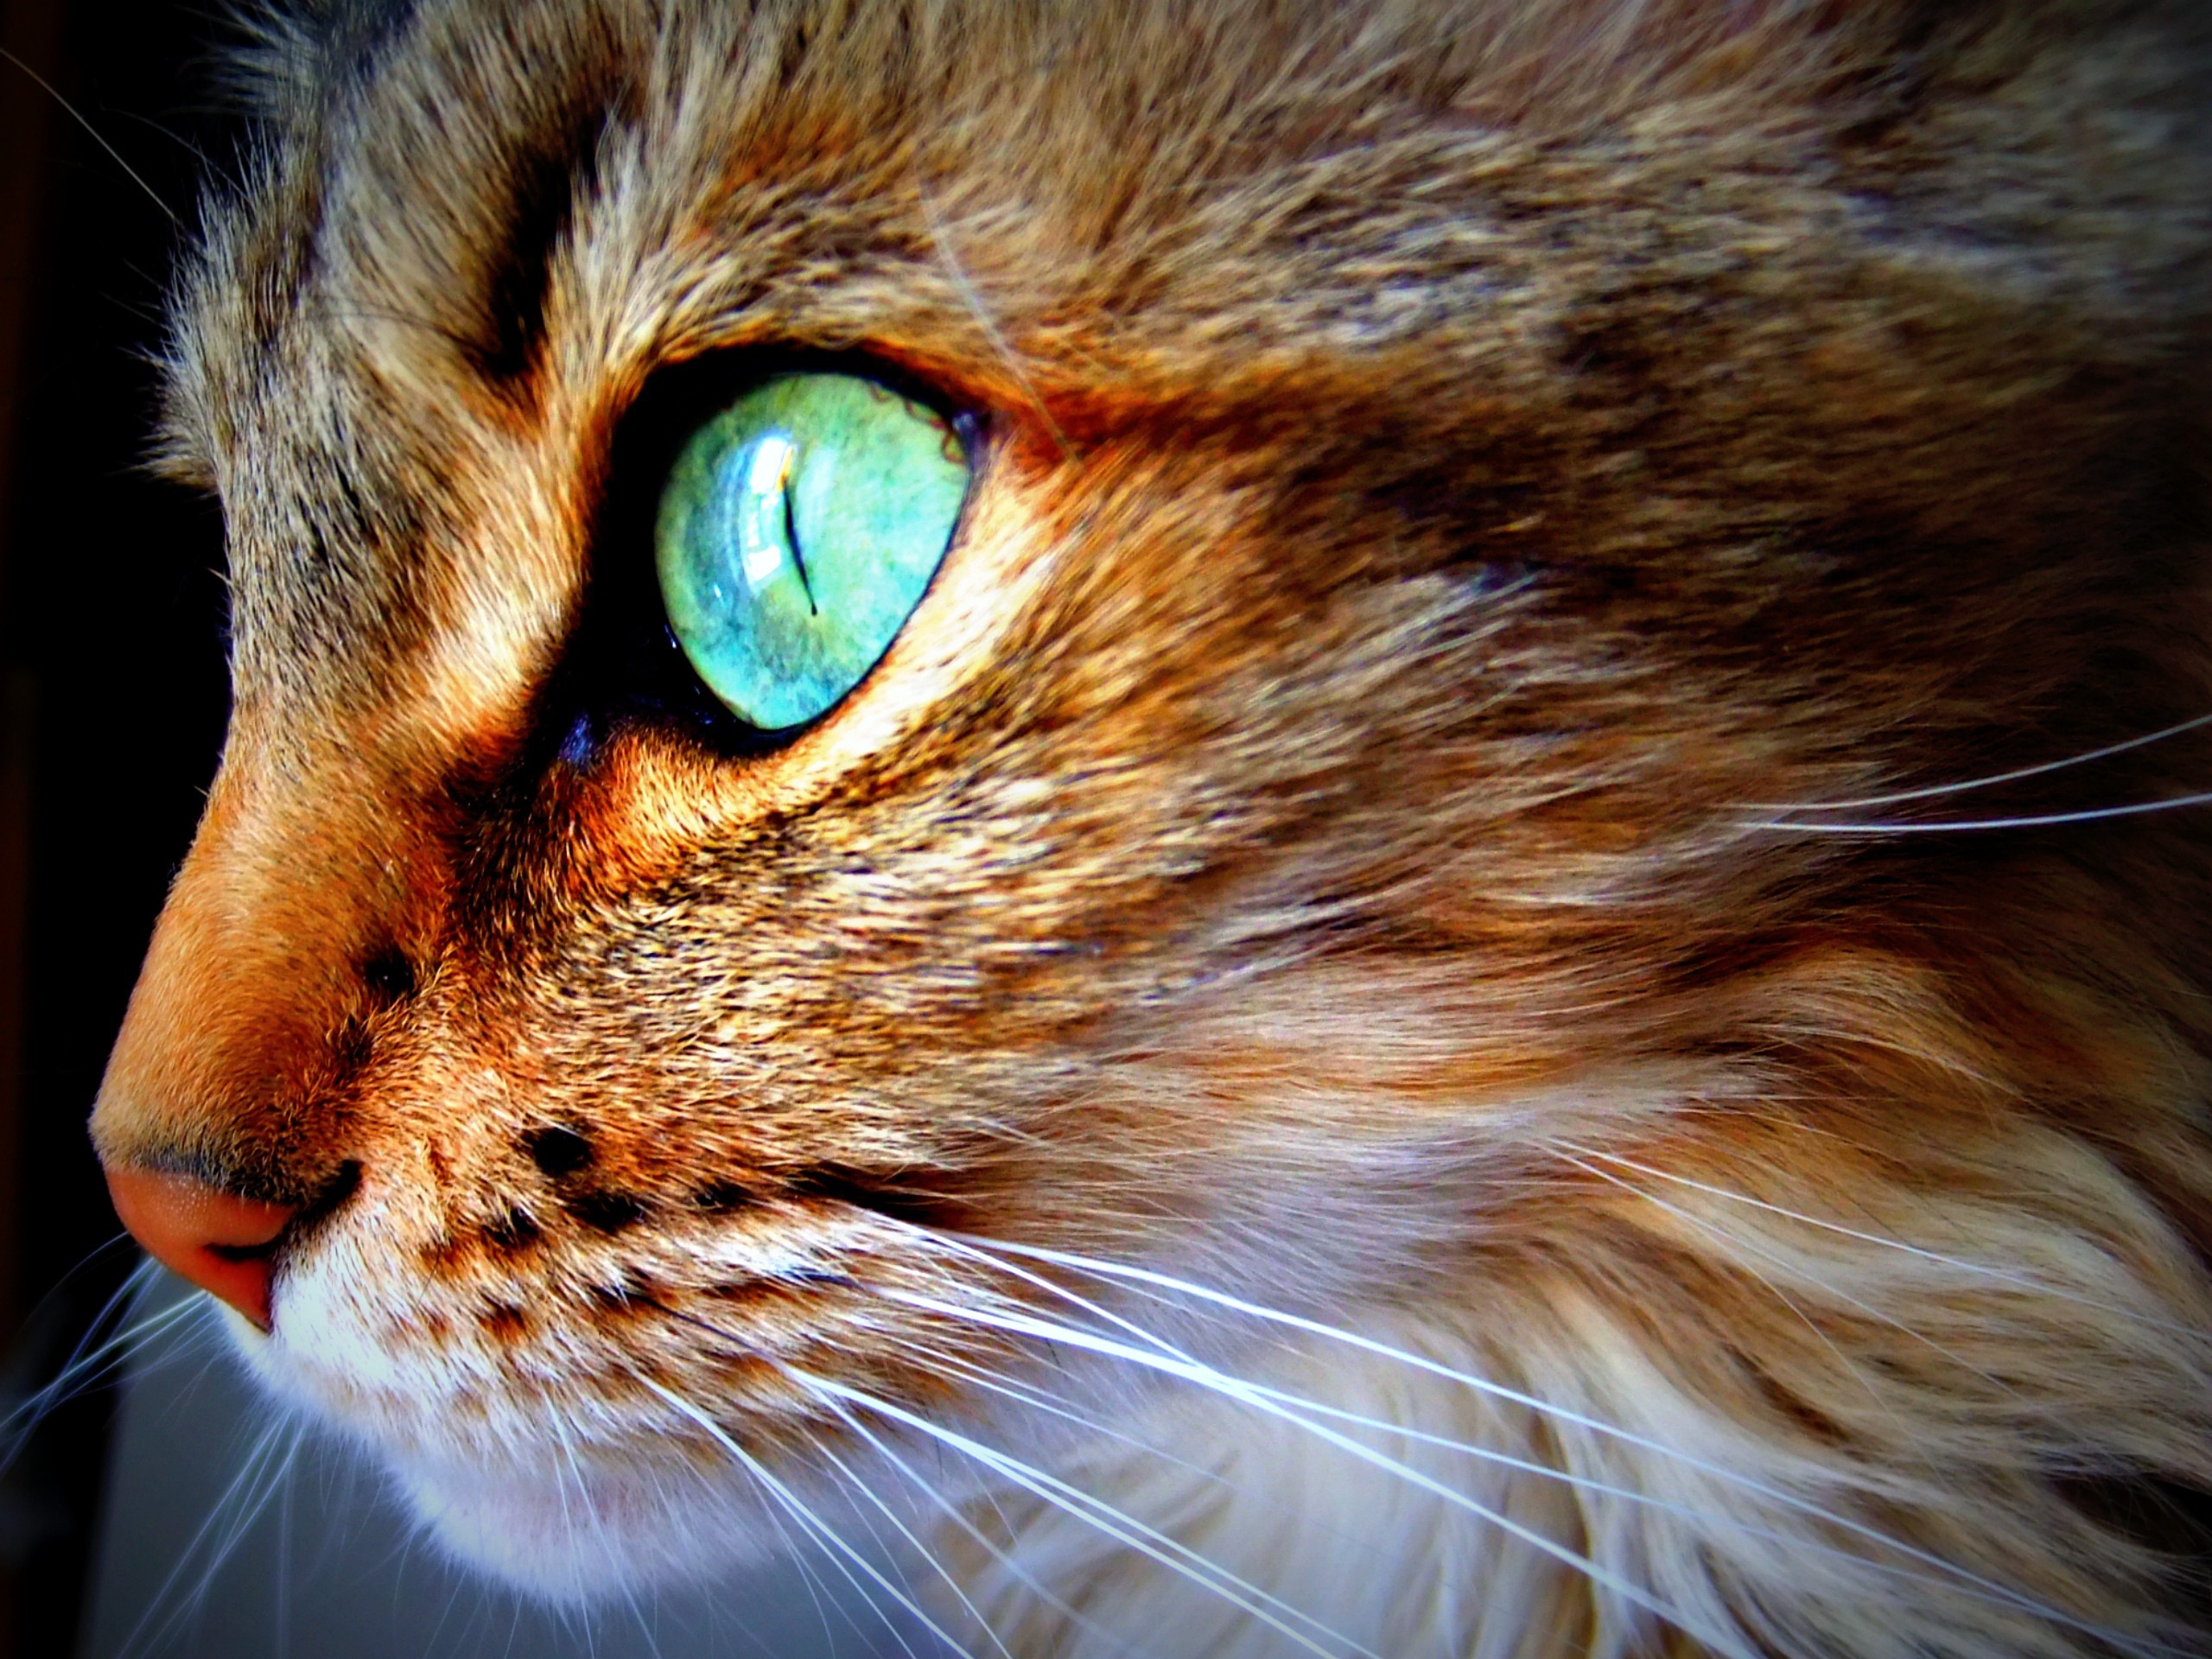 General 2560x1920 cats face eyes turquoise eyes turquoise animals mammals green eyes closeup animal eyes